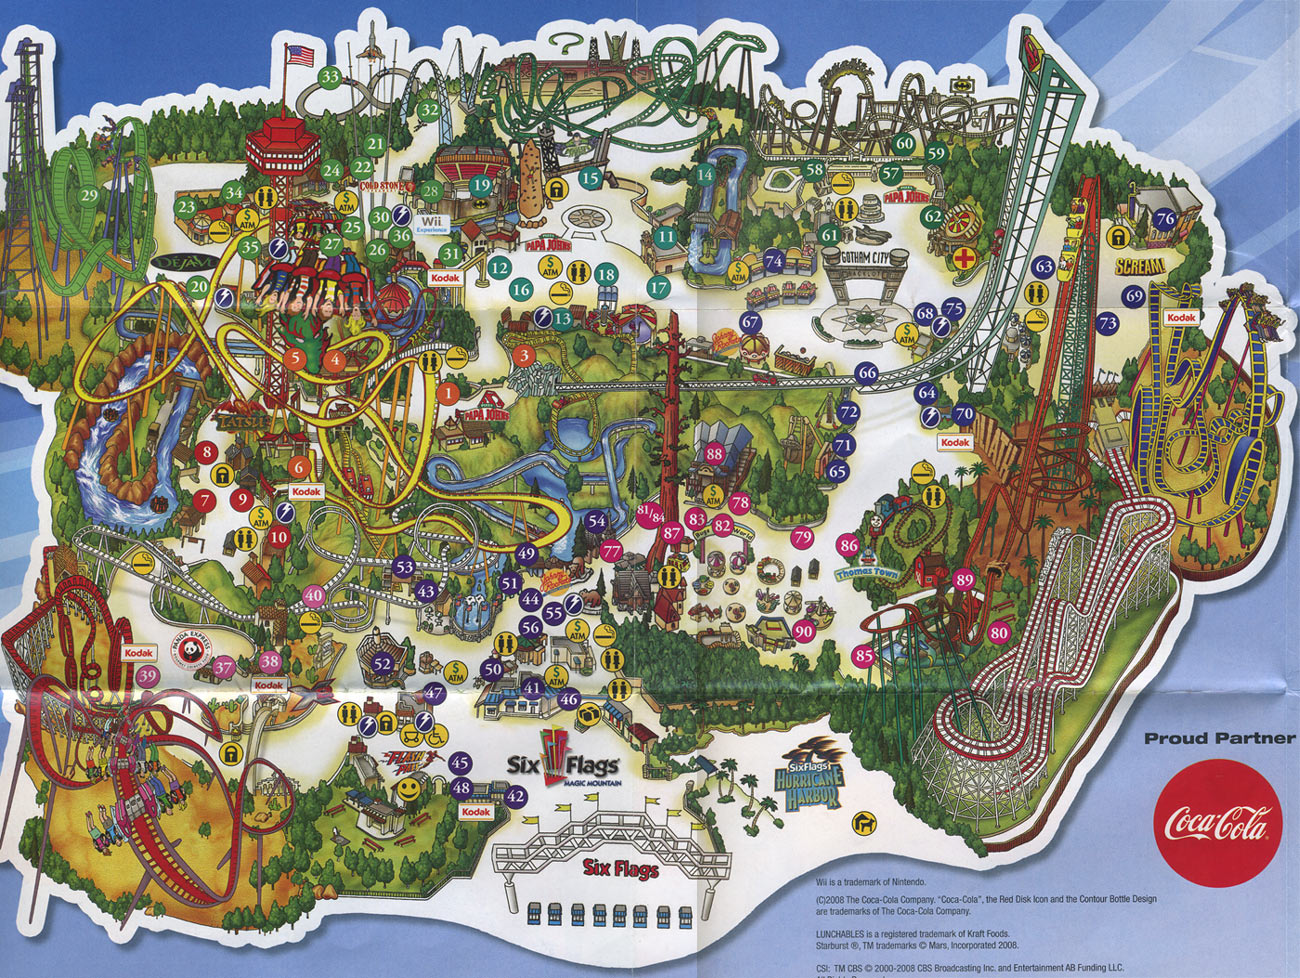 Theme Park Brochures Six Flags Magic Mountain Theme Park Brochures